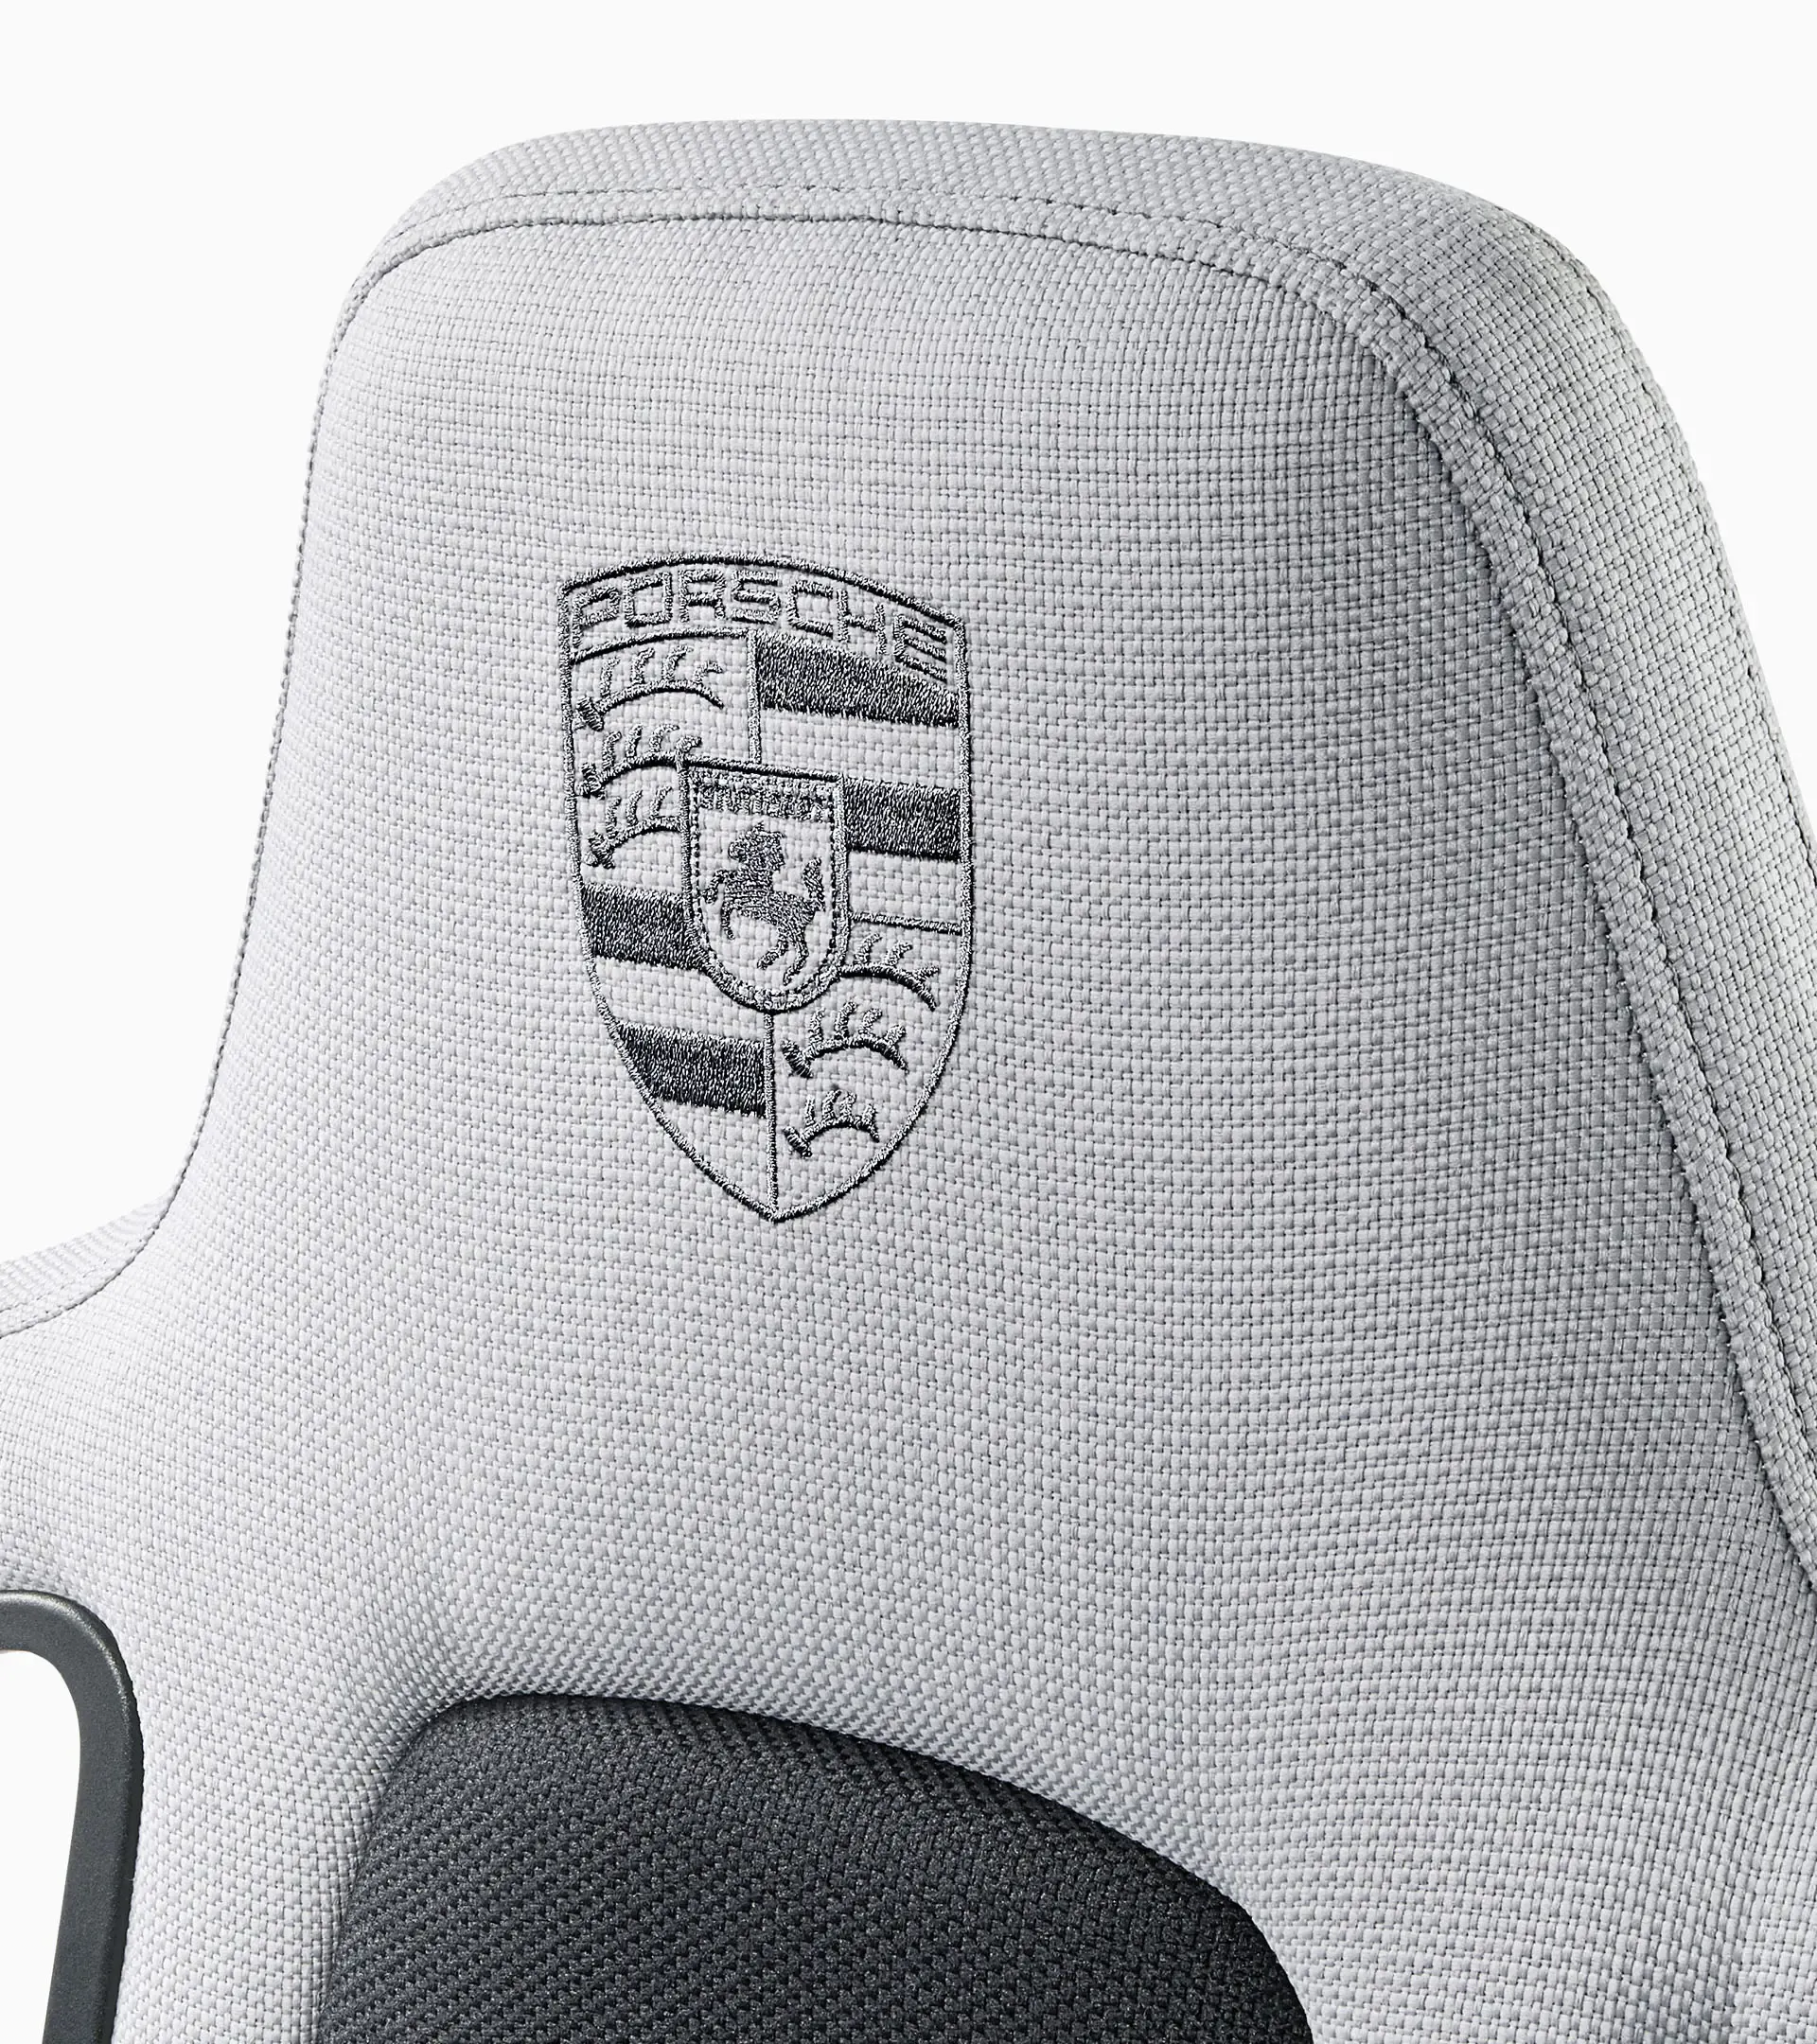 Siege de bureau RS, gamme Porsche Lifestyle – Porsche Poitiers